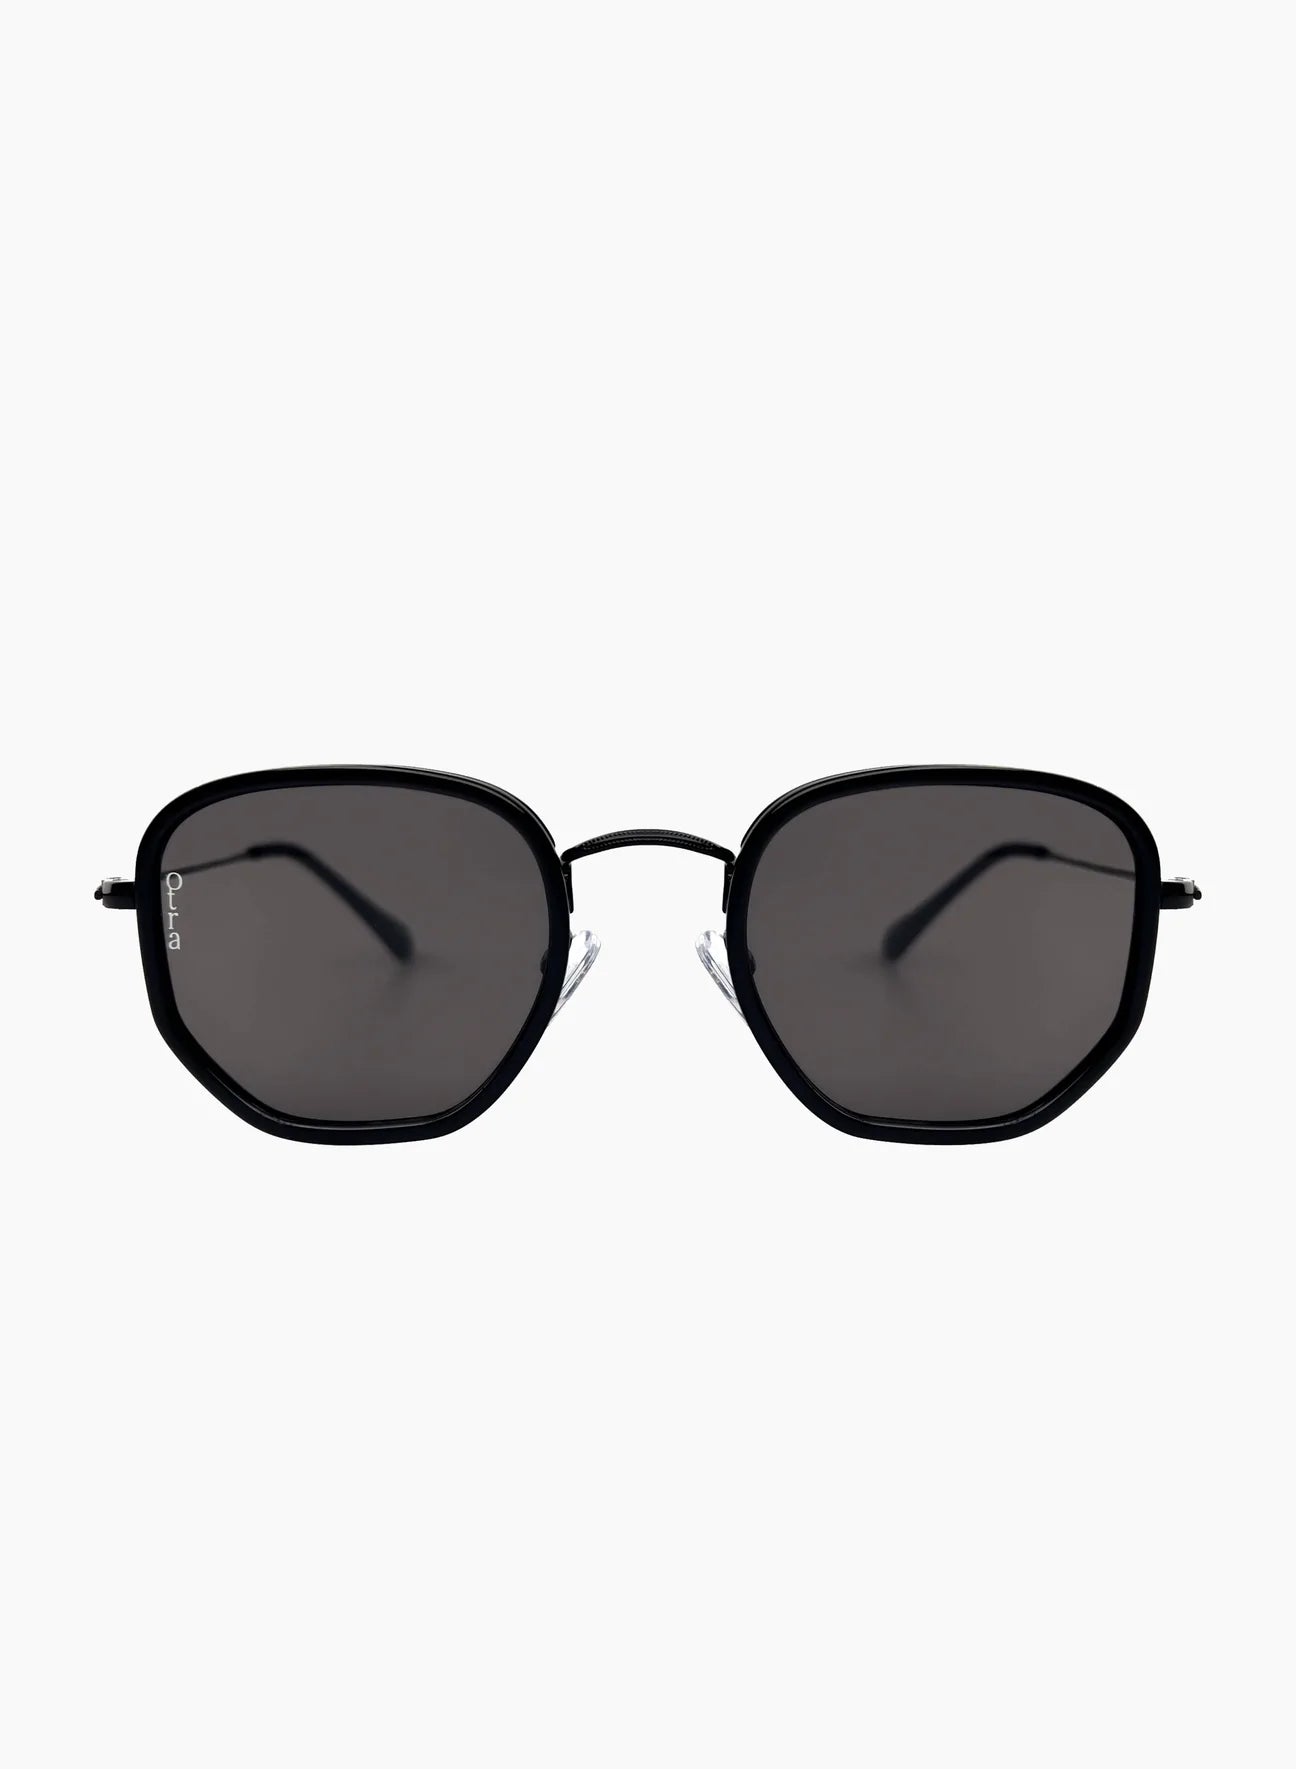 Tate Sunglasses Black